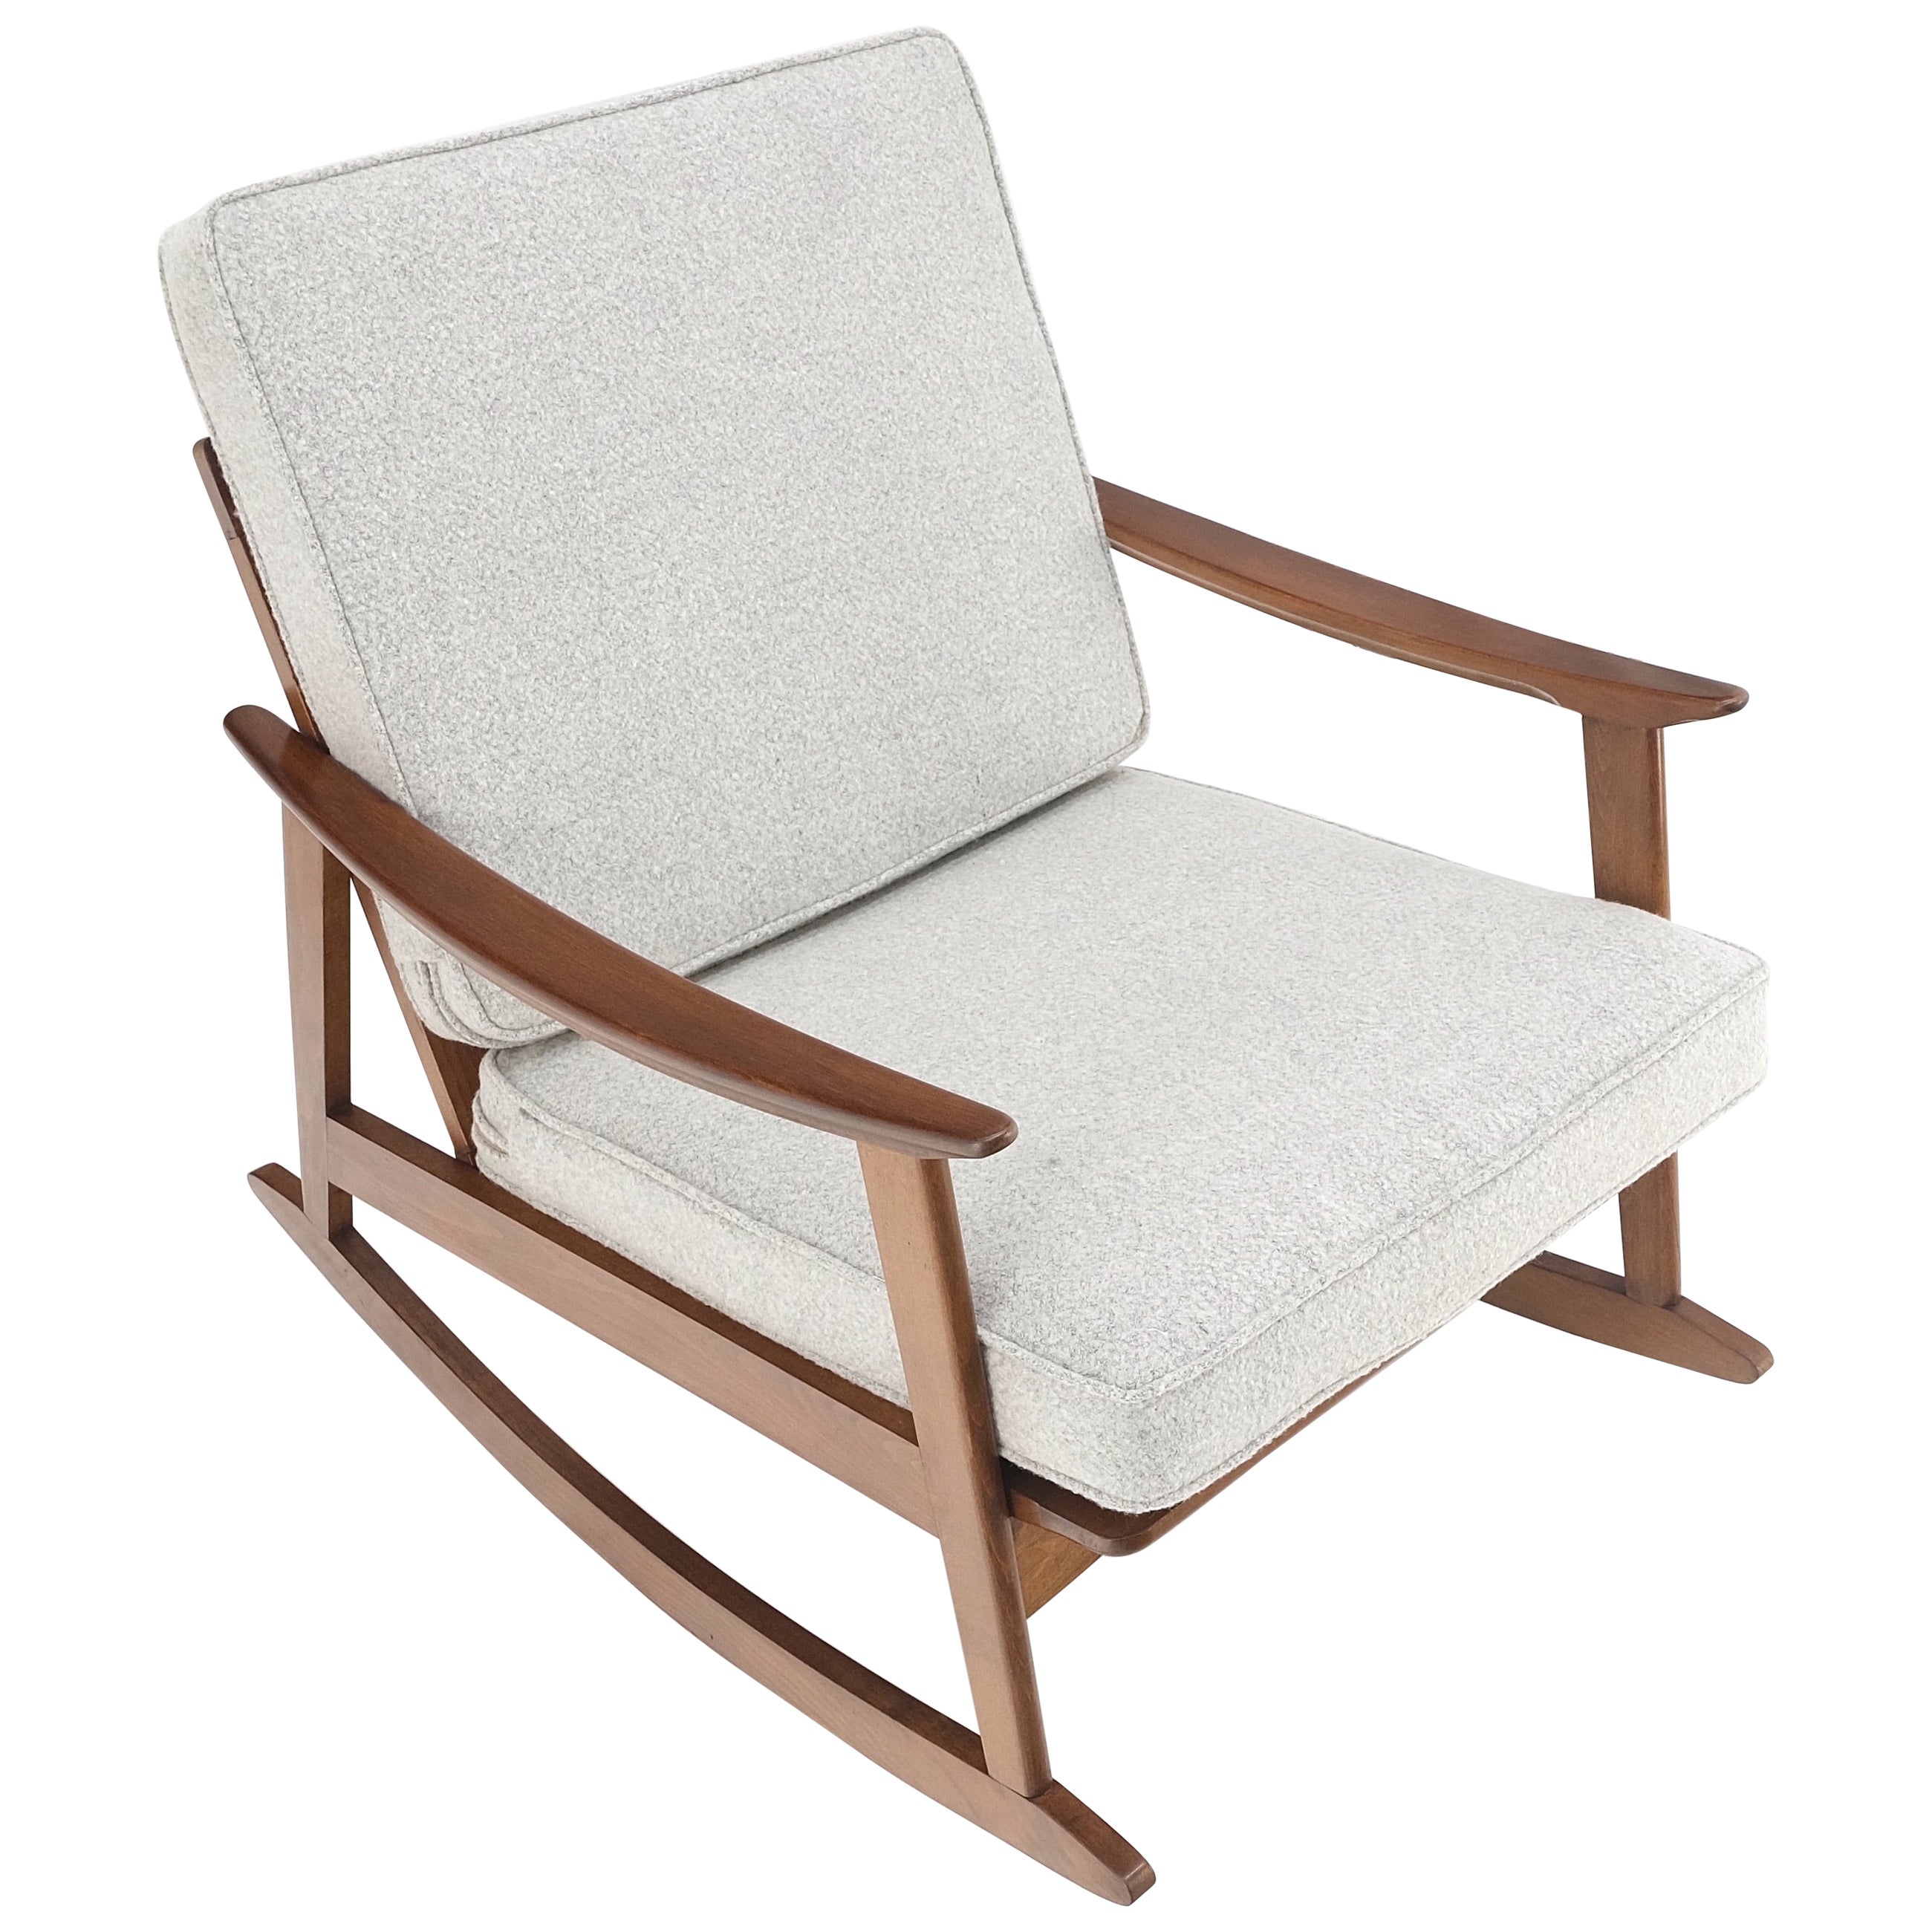 Danish Mid-Century Modern New Grey Wool Upholstery Rocking Lounge Chair Mint!